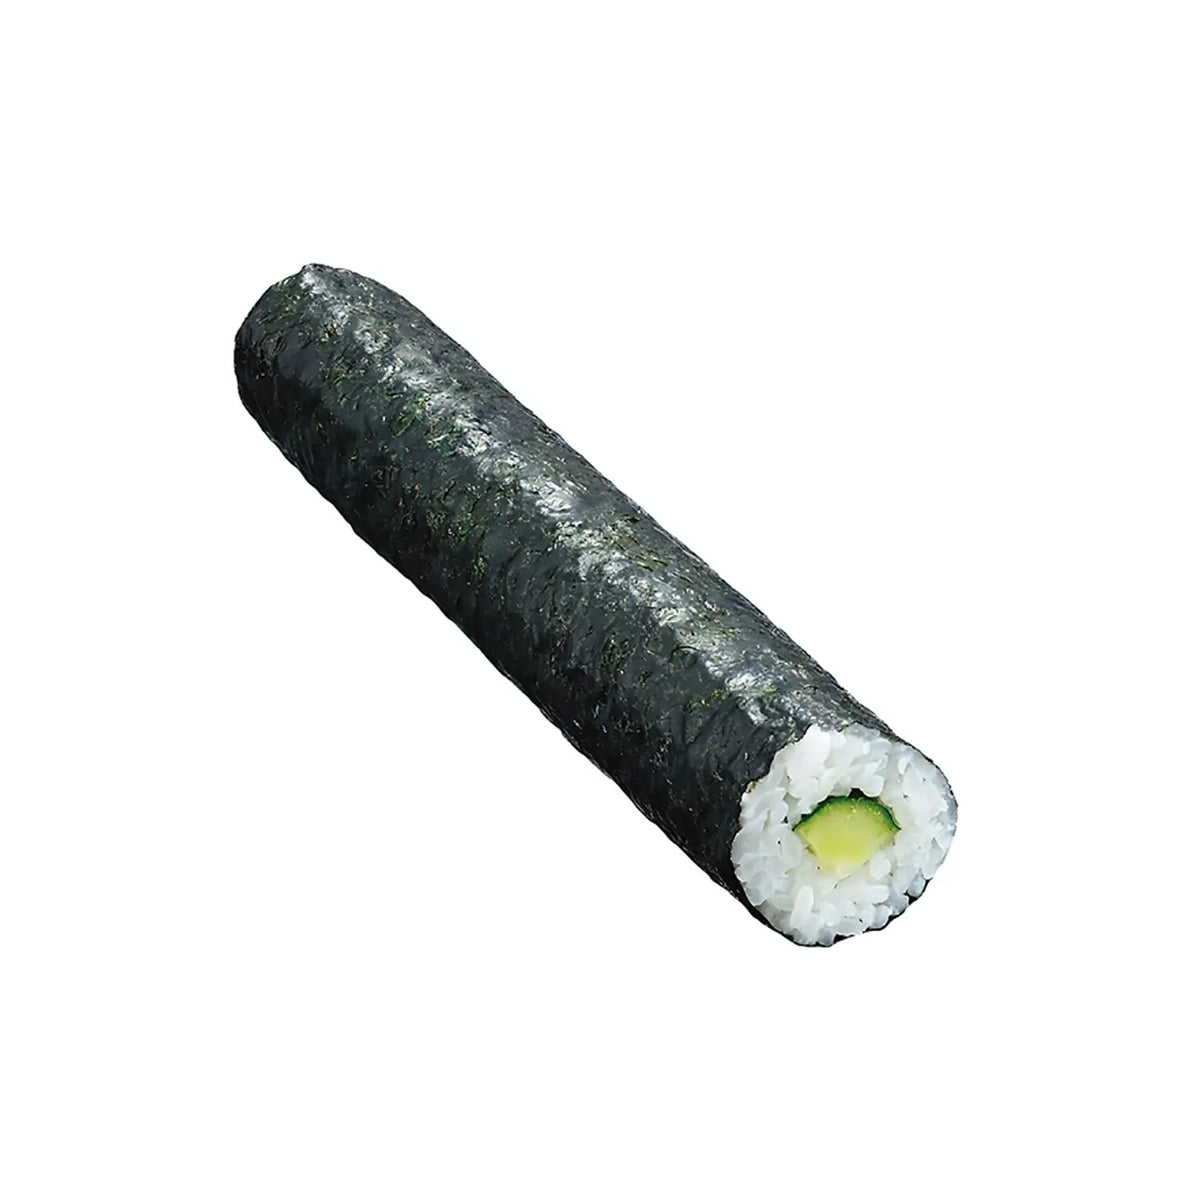 Akebono Polypropylene Thin Sushi Roll Mold